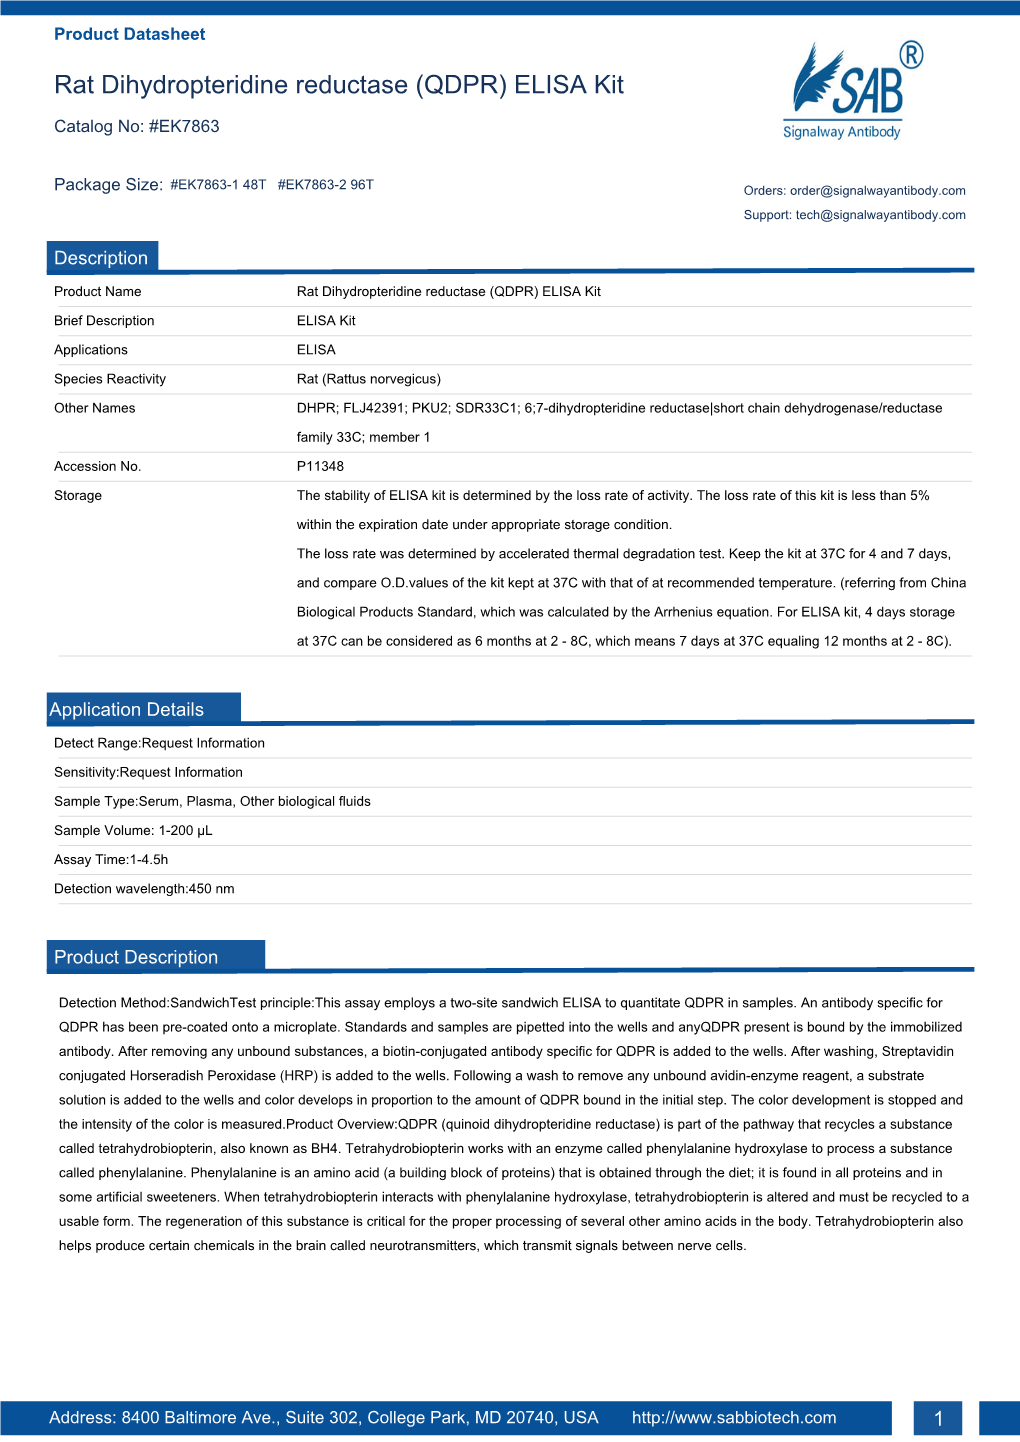 Rat Dihydropteridine Reductase (QDPR) ELISA Kit